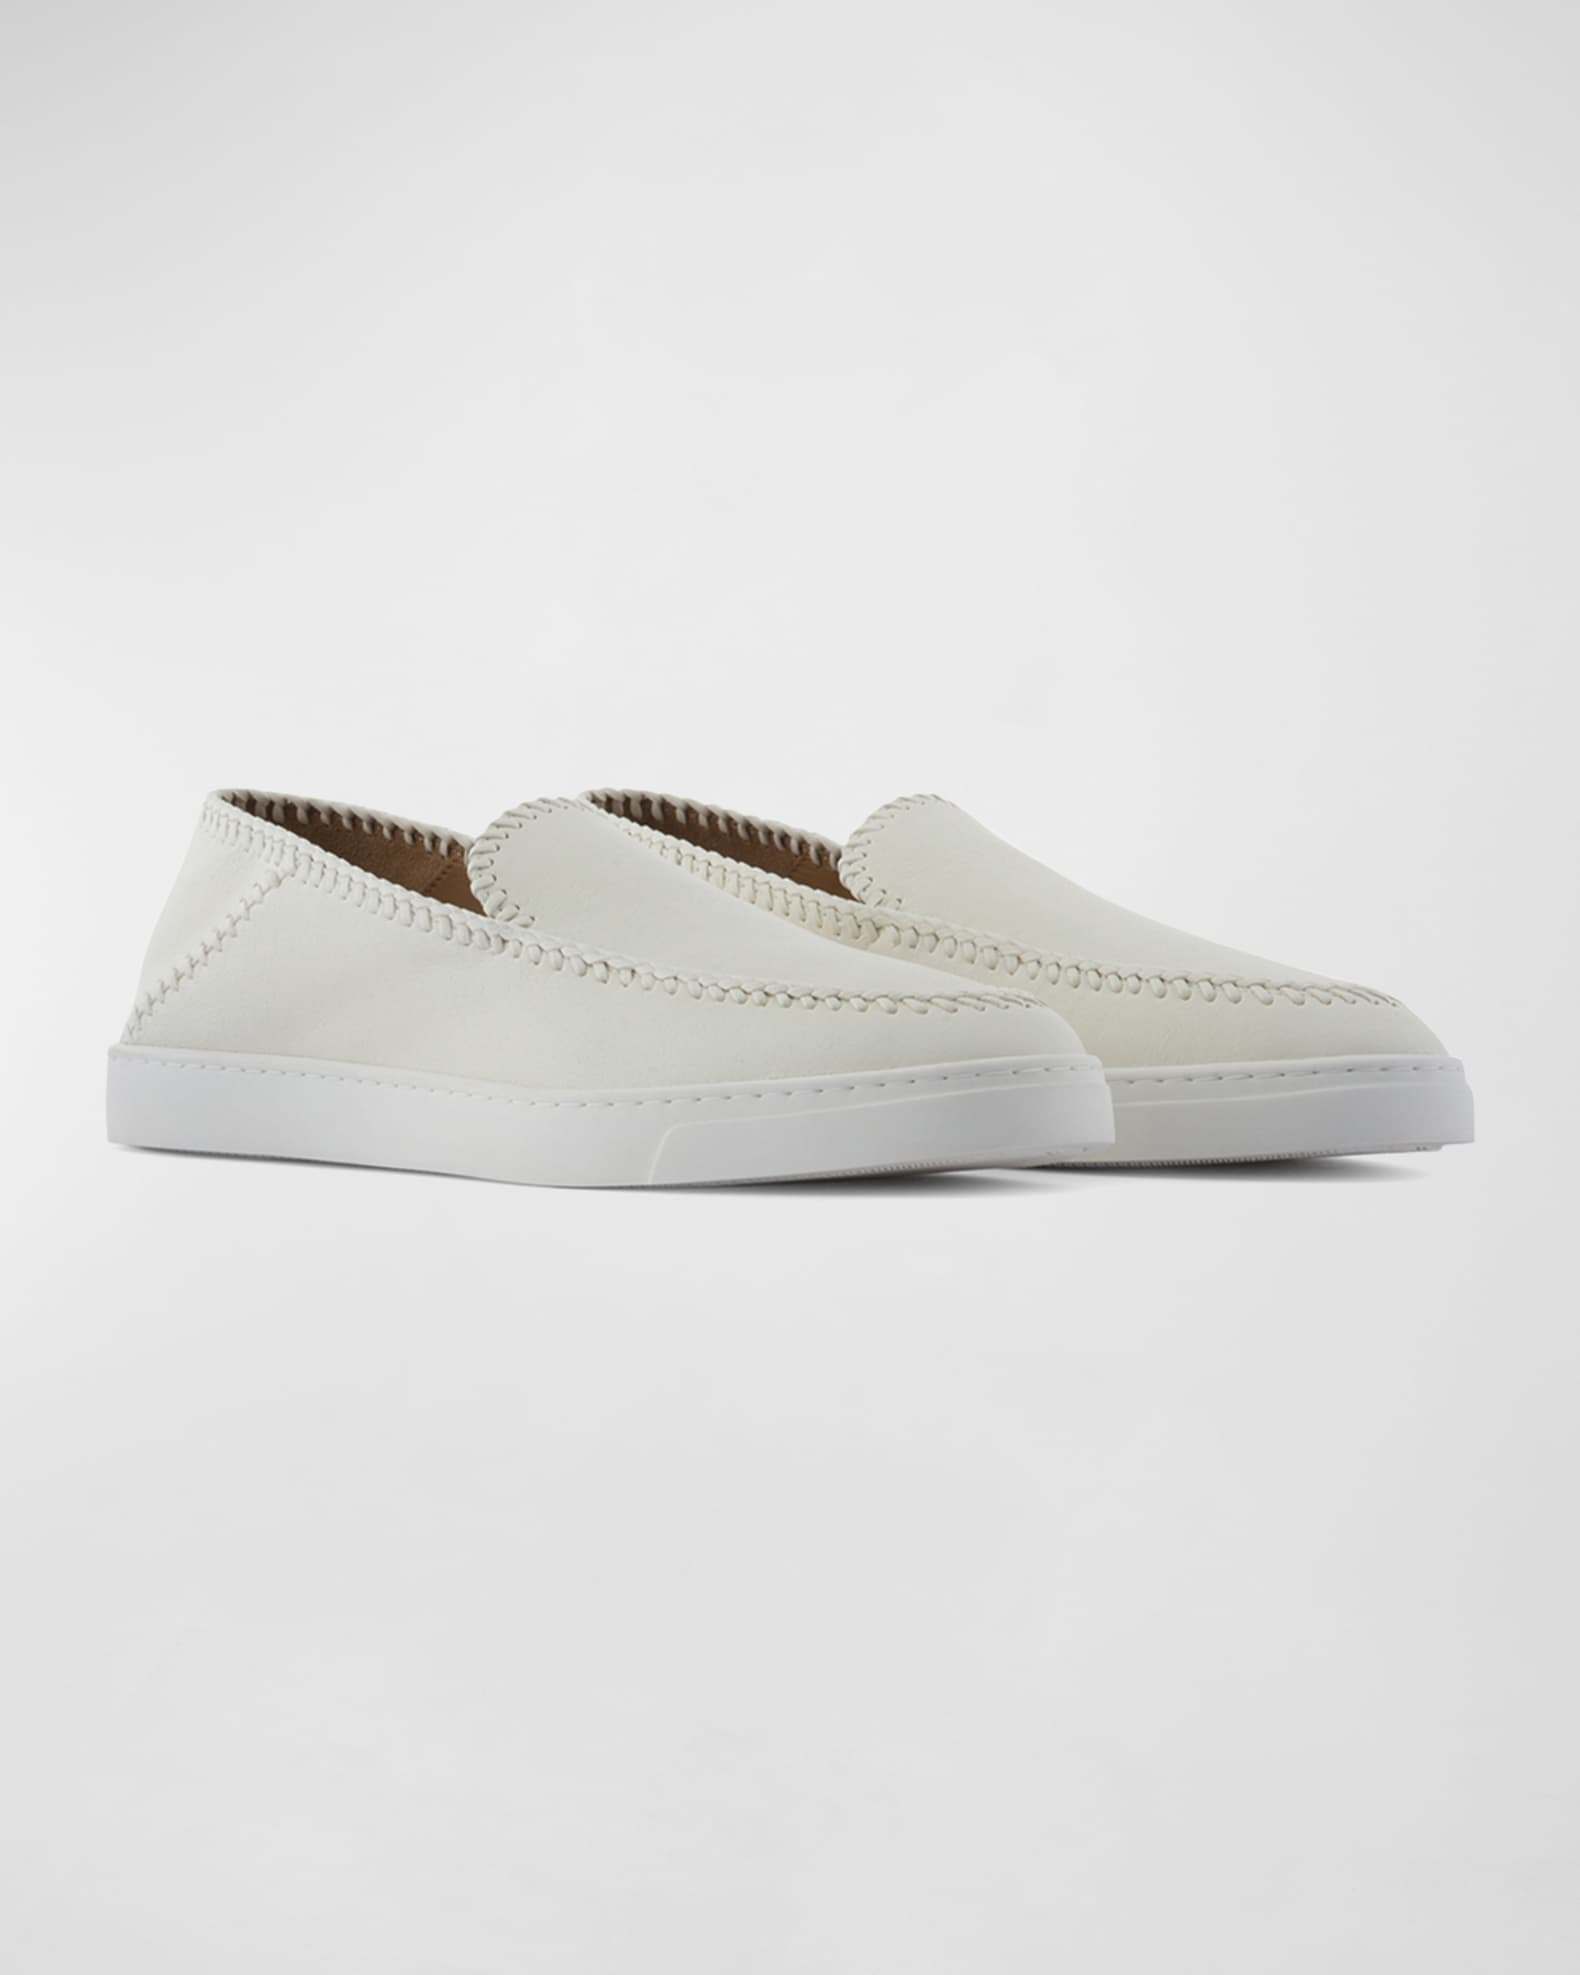 Giorgio Armani Men's Woven Leather Slip-On Sneakers | Neiman Marcus